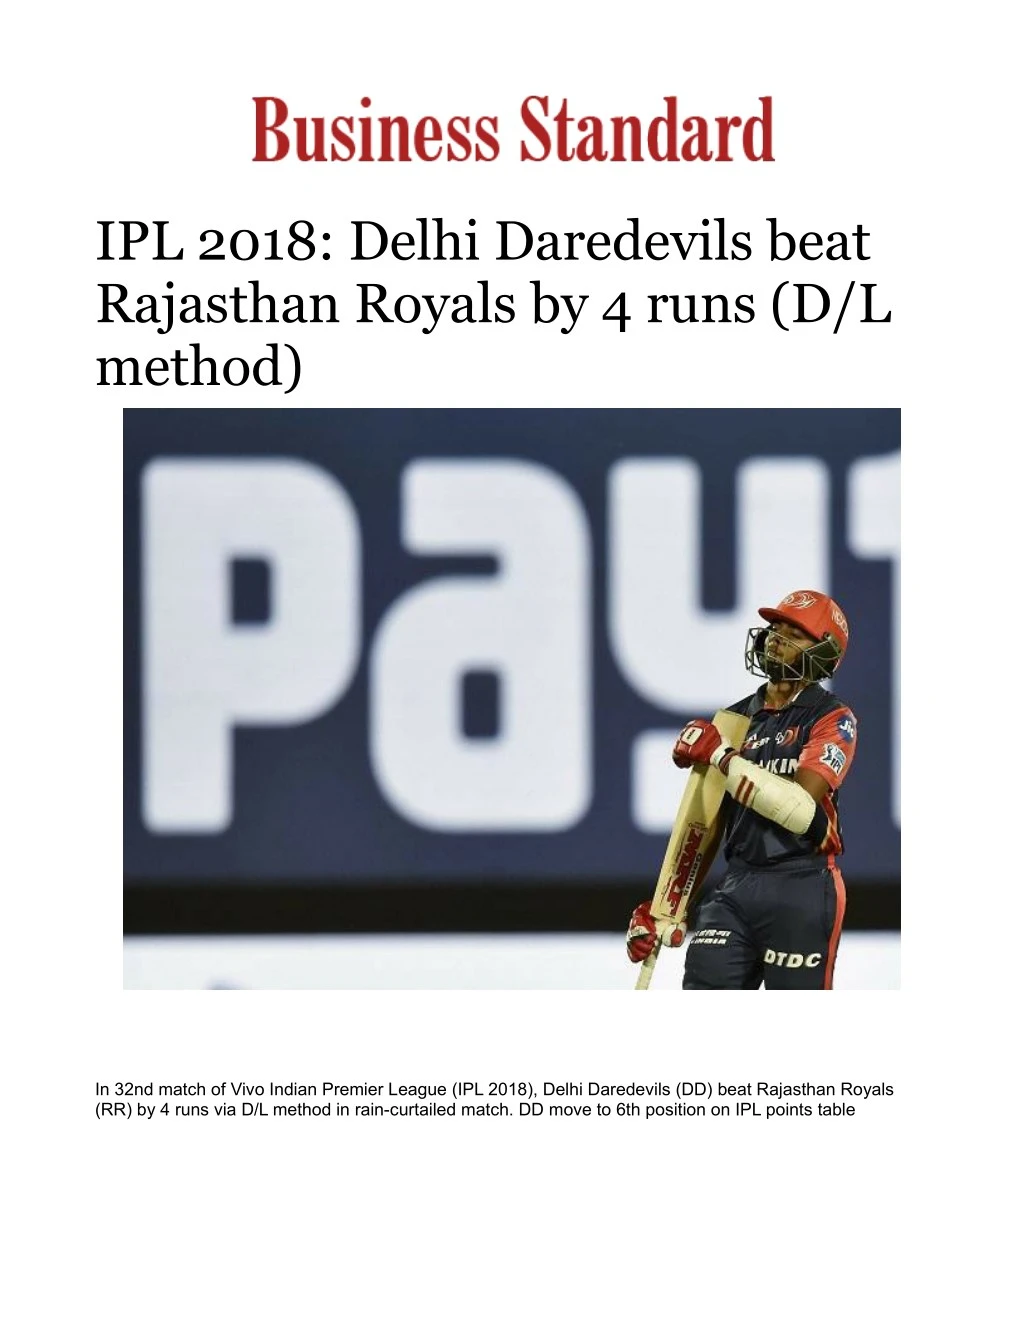 ipl 2018 delhi daredevils beat rajasthan royals